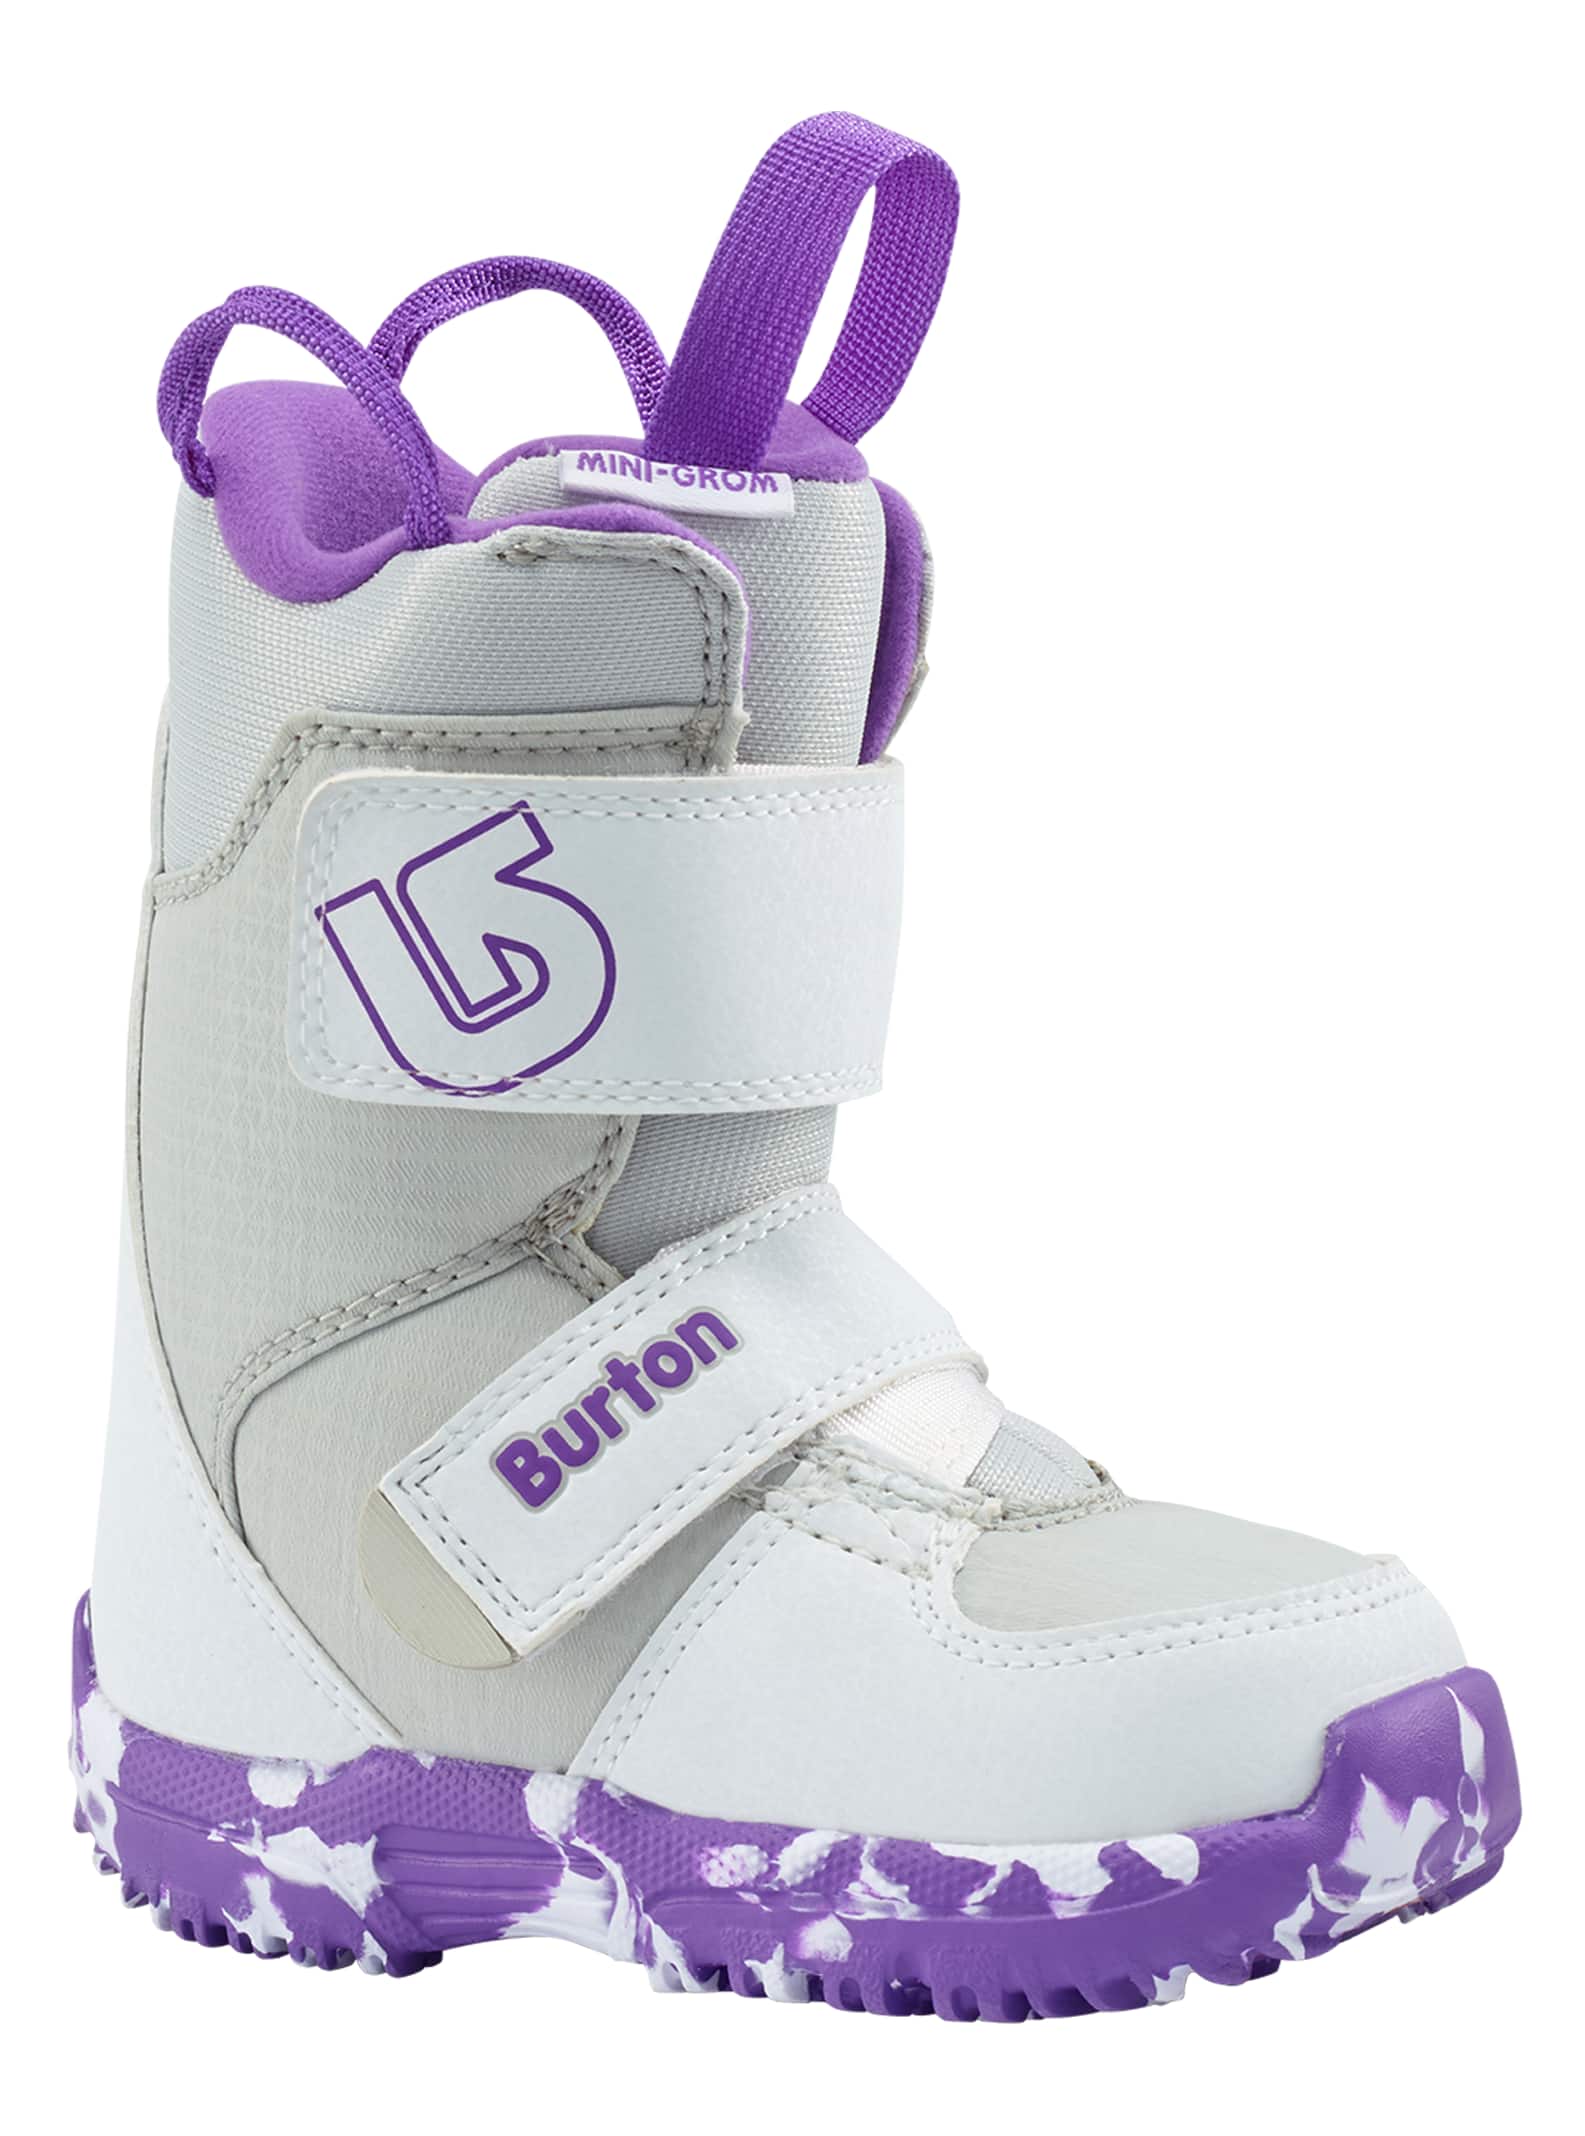 Burton - Boots de snowboard Mini-Grom tout-petit, White / Purple, 10C